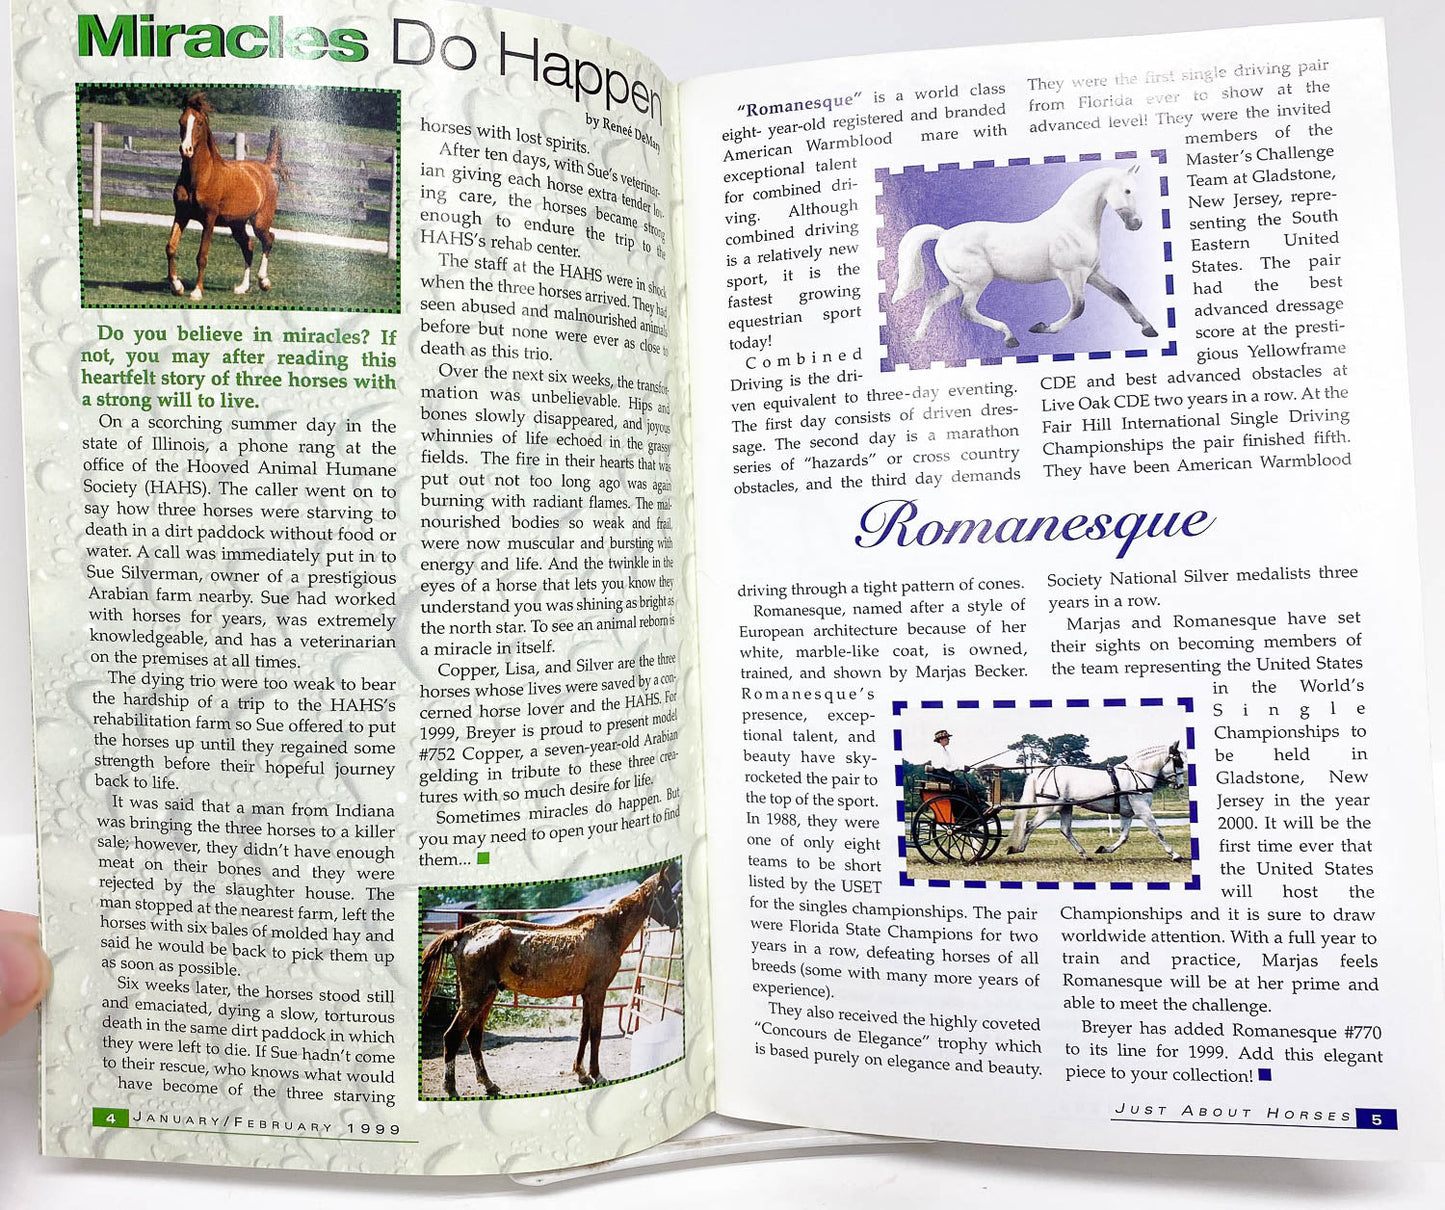 Just About Horses Magazine Vol. 26, No. 1, 1999 Jan/Feb